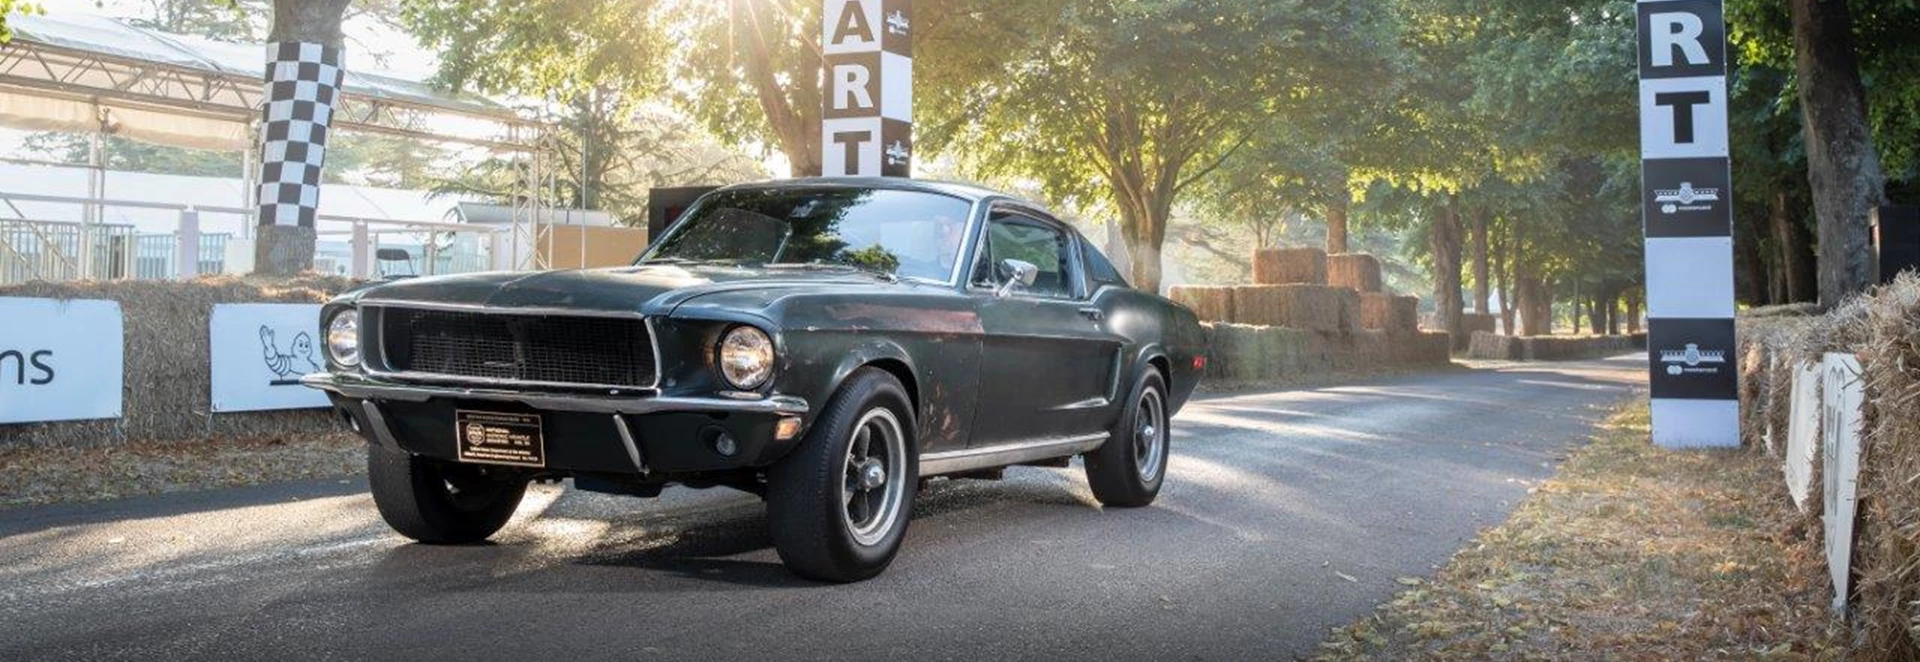 Original Ford Mustang Bullitt film car driven by Steve McQueen heading to auction